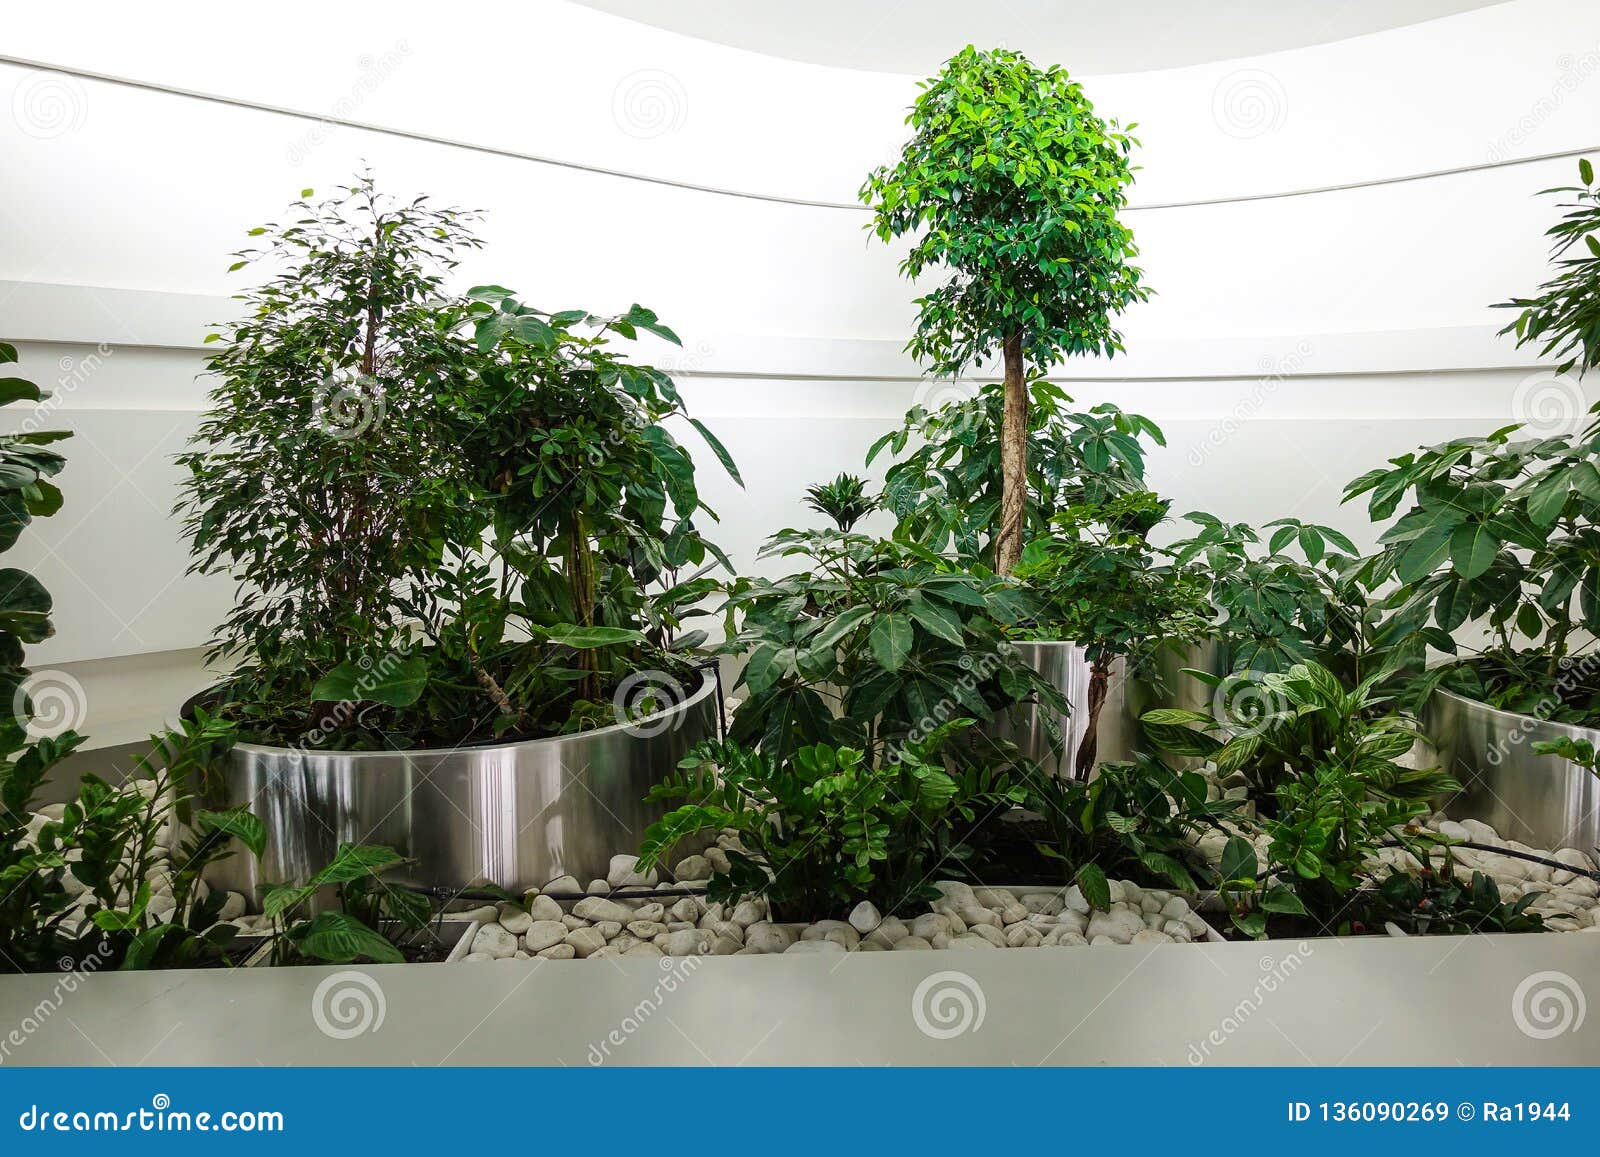 Modern Interior Design With Indoor Plants Stock Image